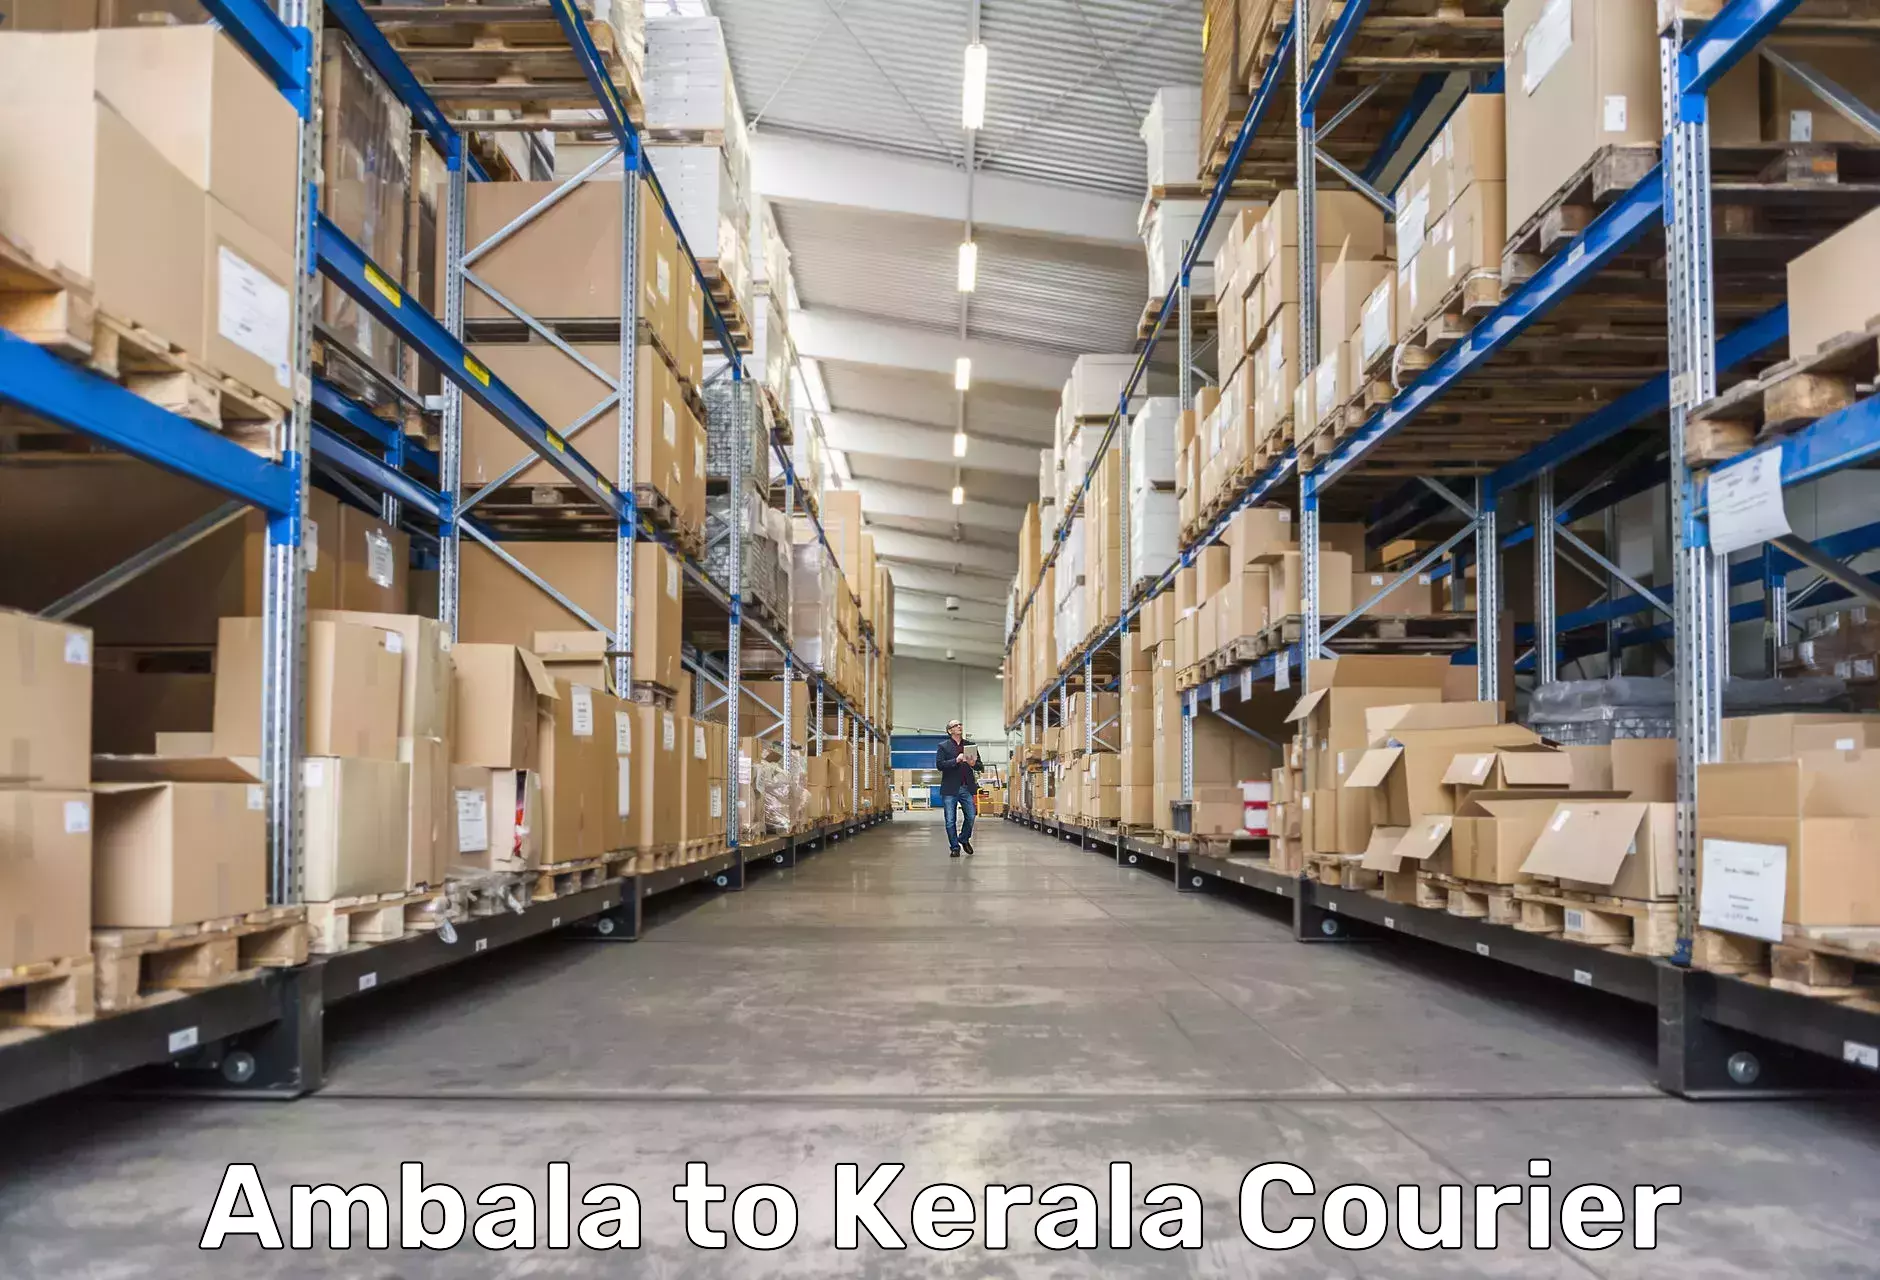 Digital courier platforms Ambala to Thodupuzha